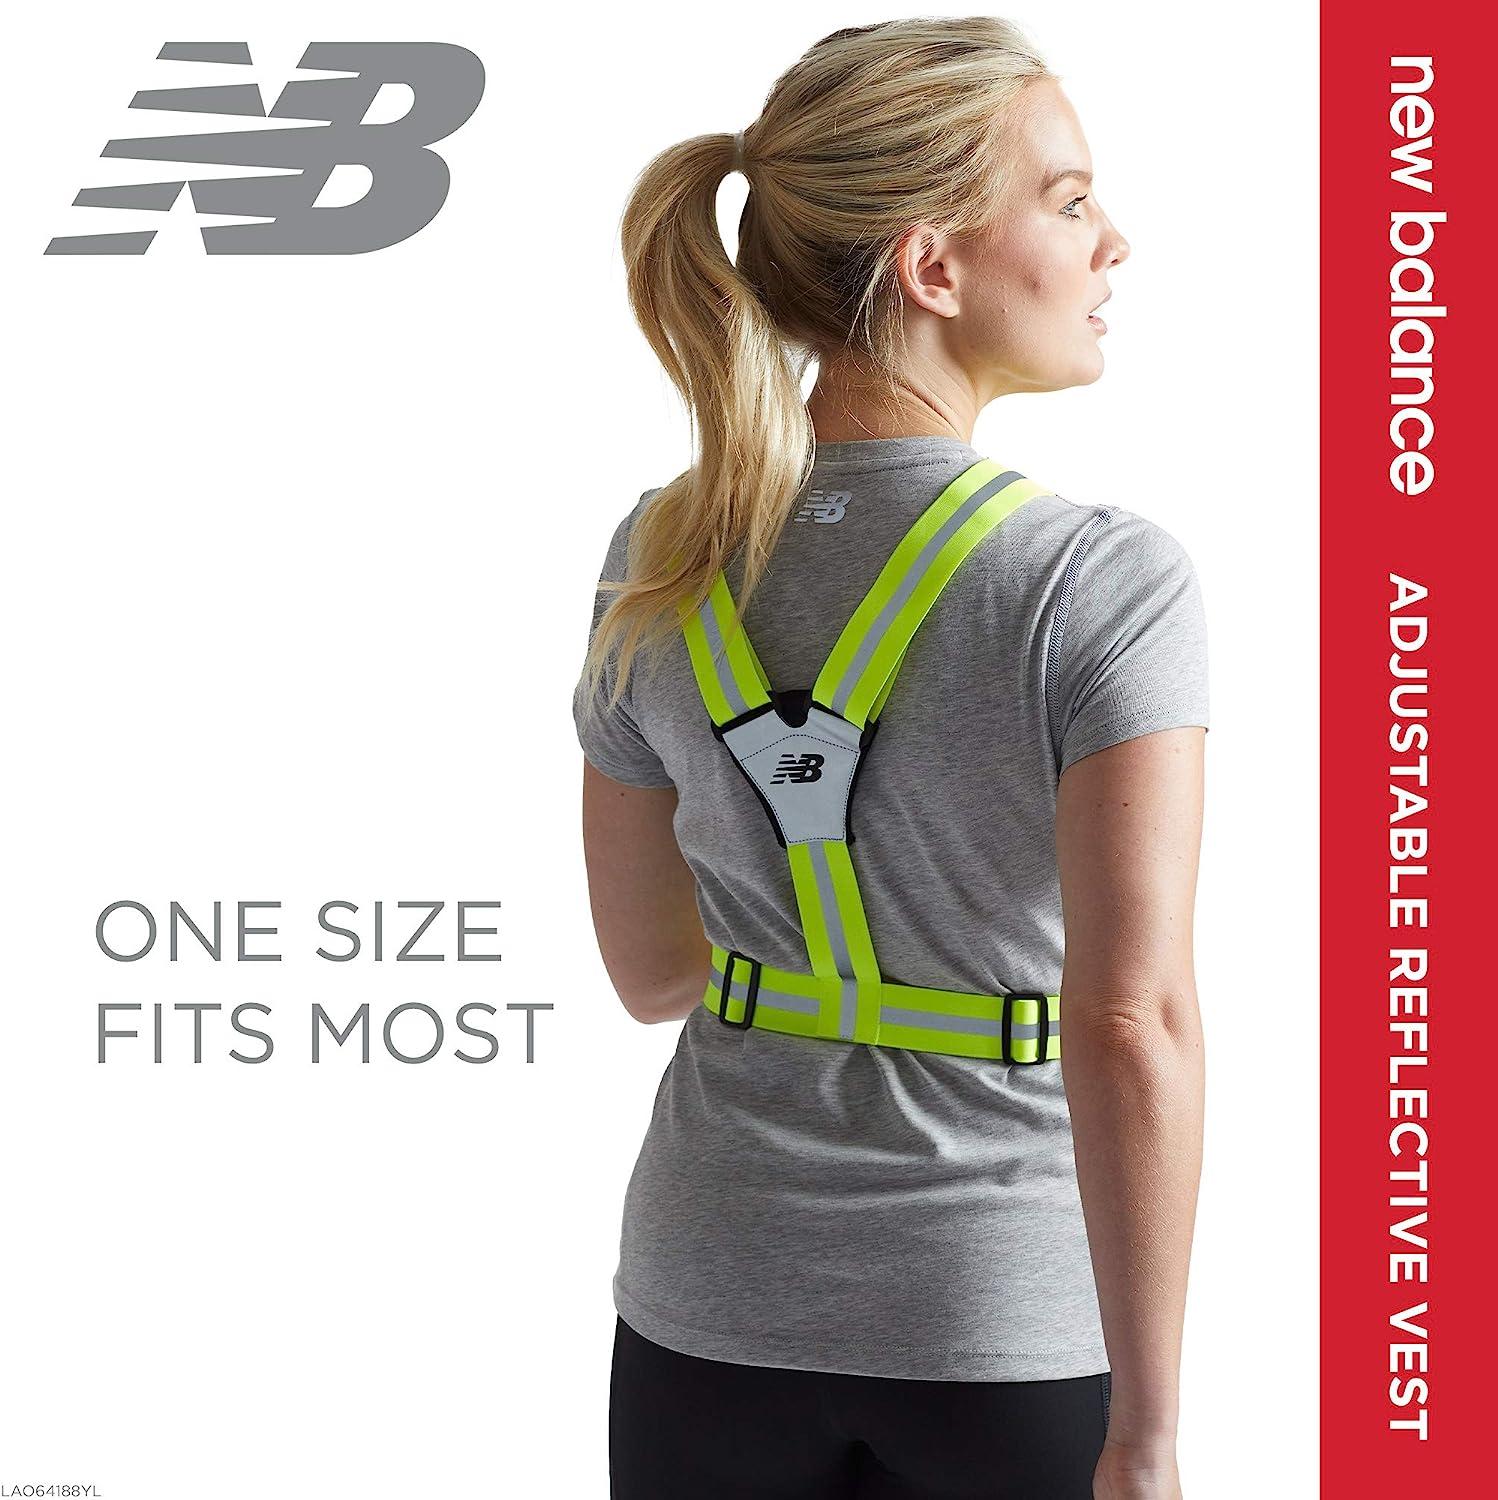 New Balance Reflective Vest - Reflective Running Gear for Women & Men -  Walking at Night, Cycling, Running - Walking Reflectors for Nighttime Safety,  Neon